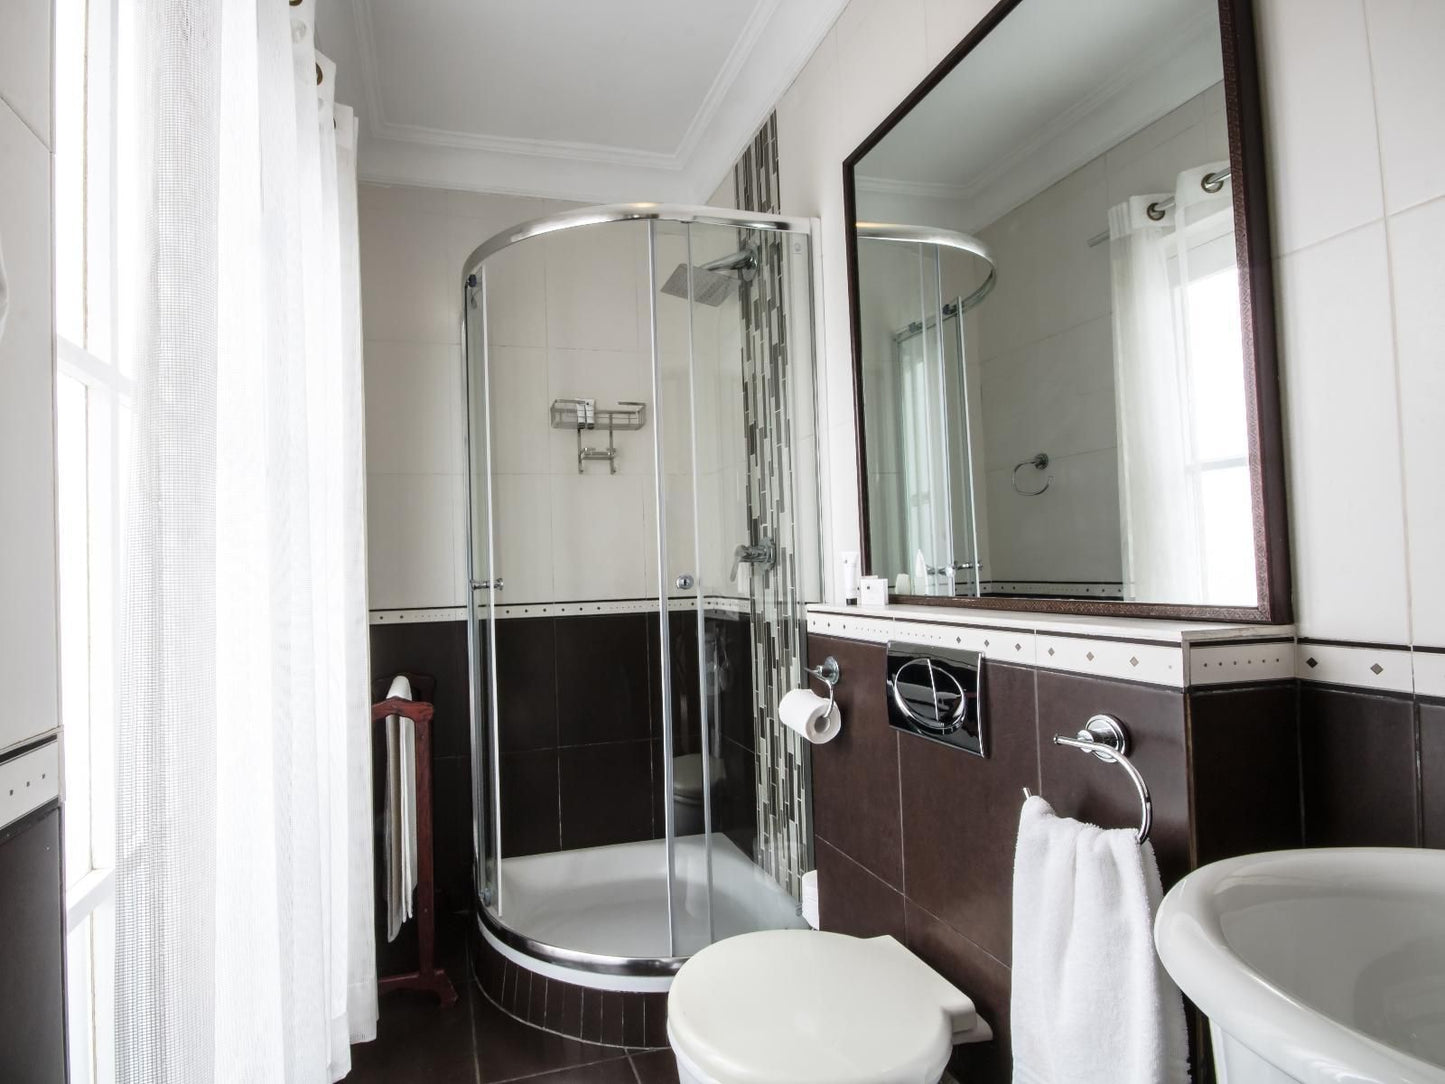 Bon Ami Morningside Durban Kwazulu Natal South Africa Unsaturated, Bathroom